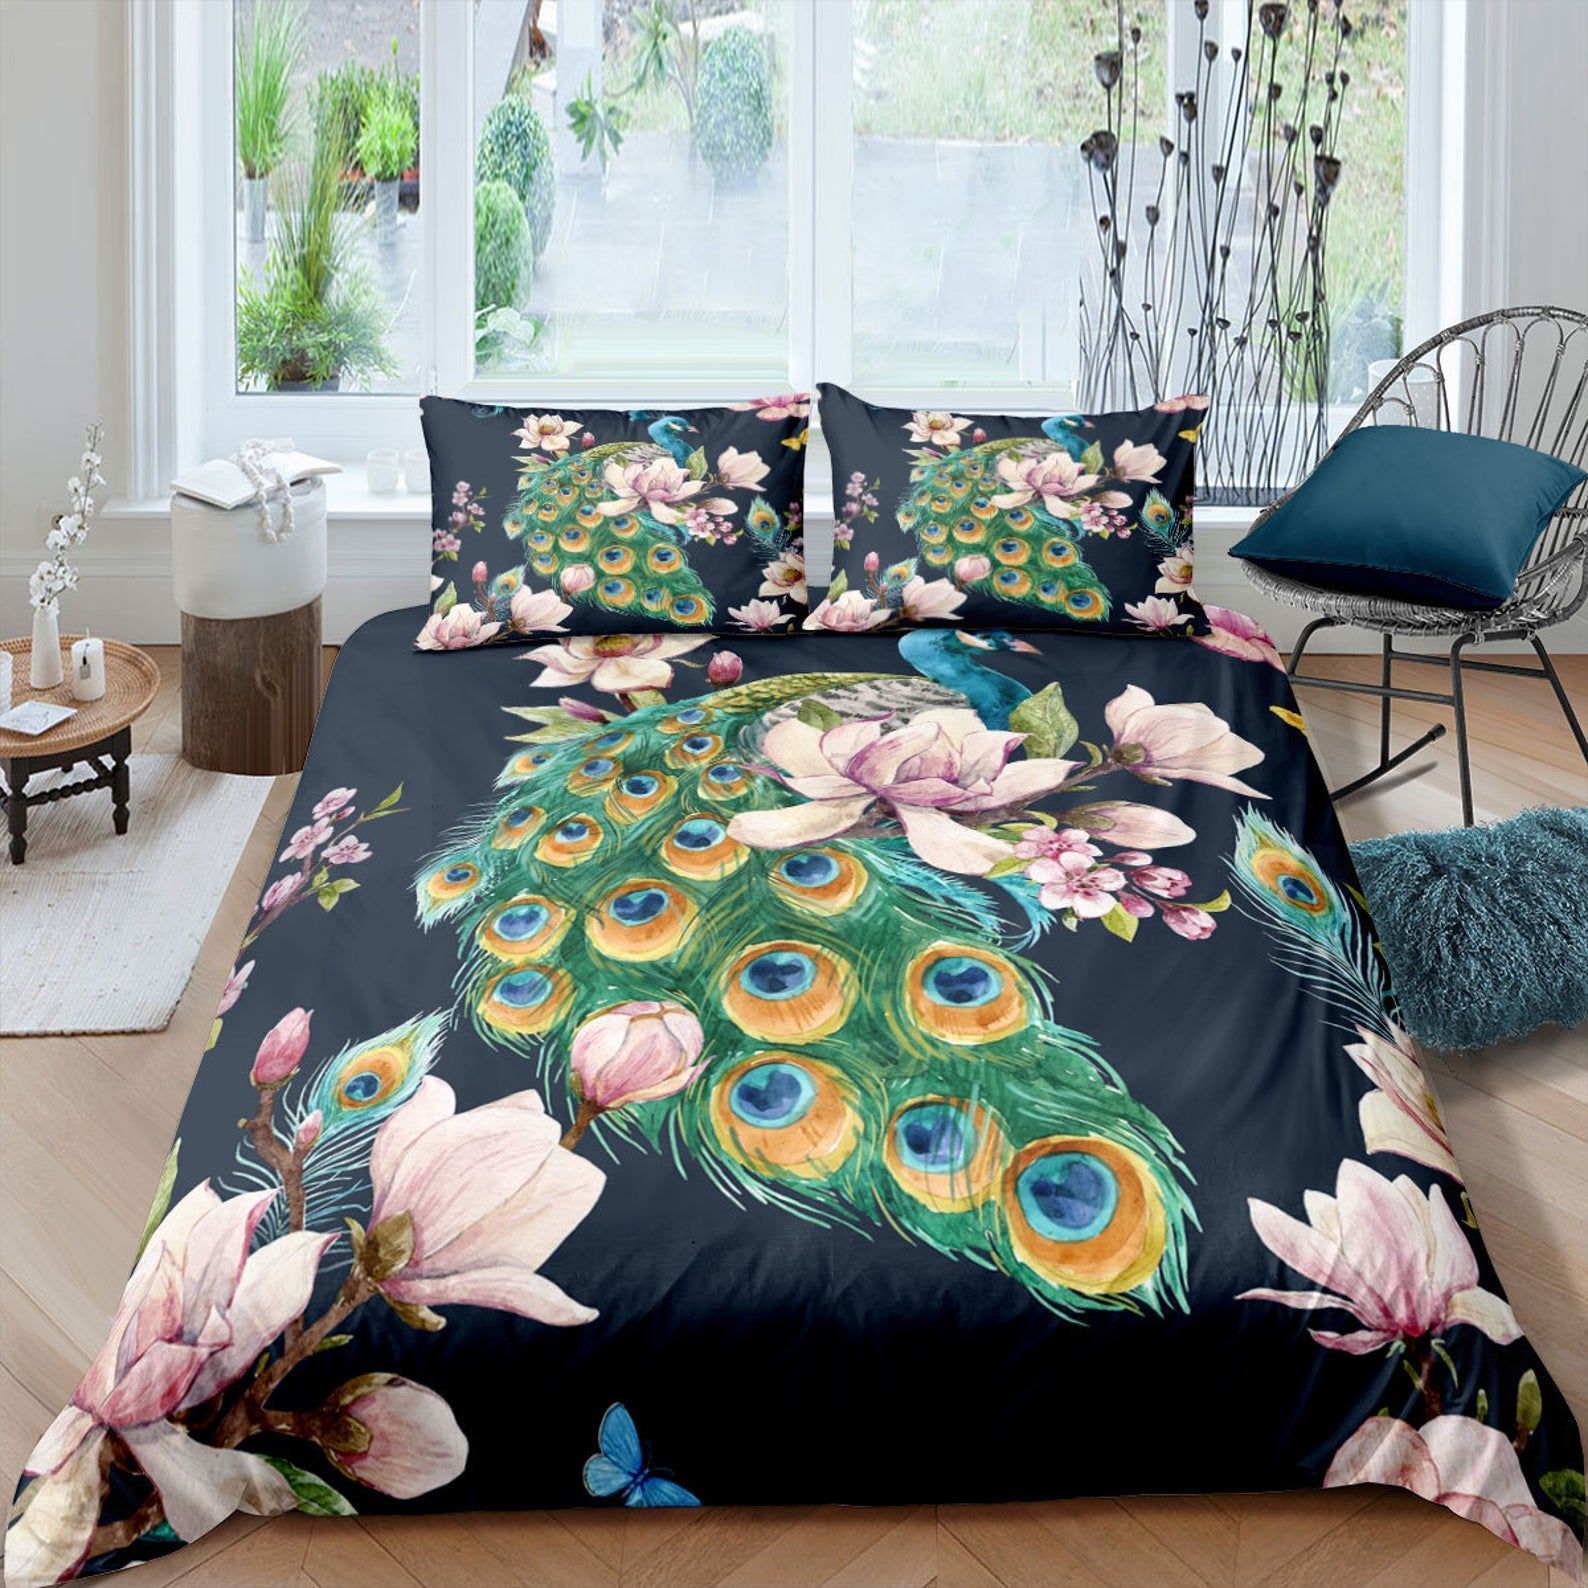 Peacock Flower Pattern Bedding Set Bed Sheets Spread Comforter Duvet Cover Bedding Sets